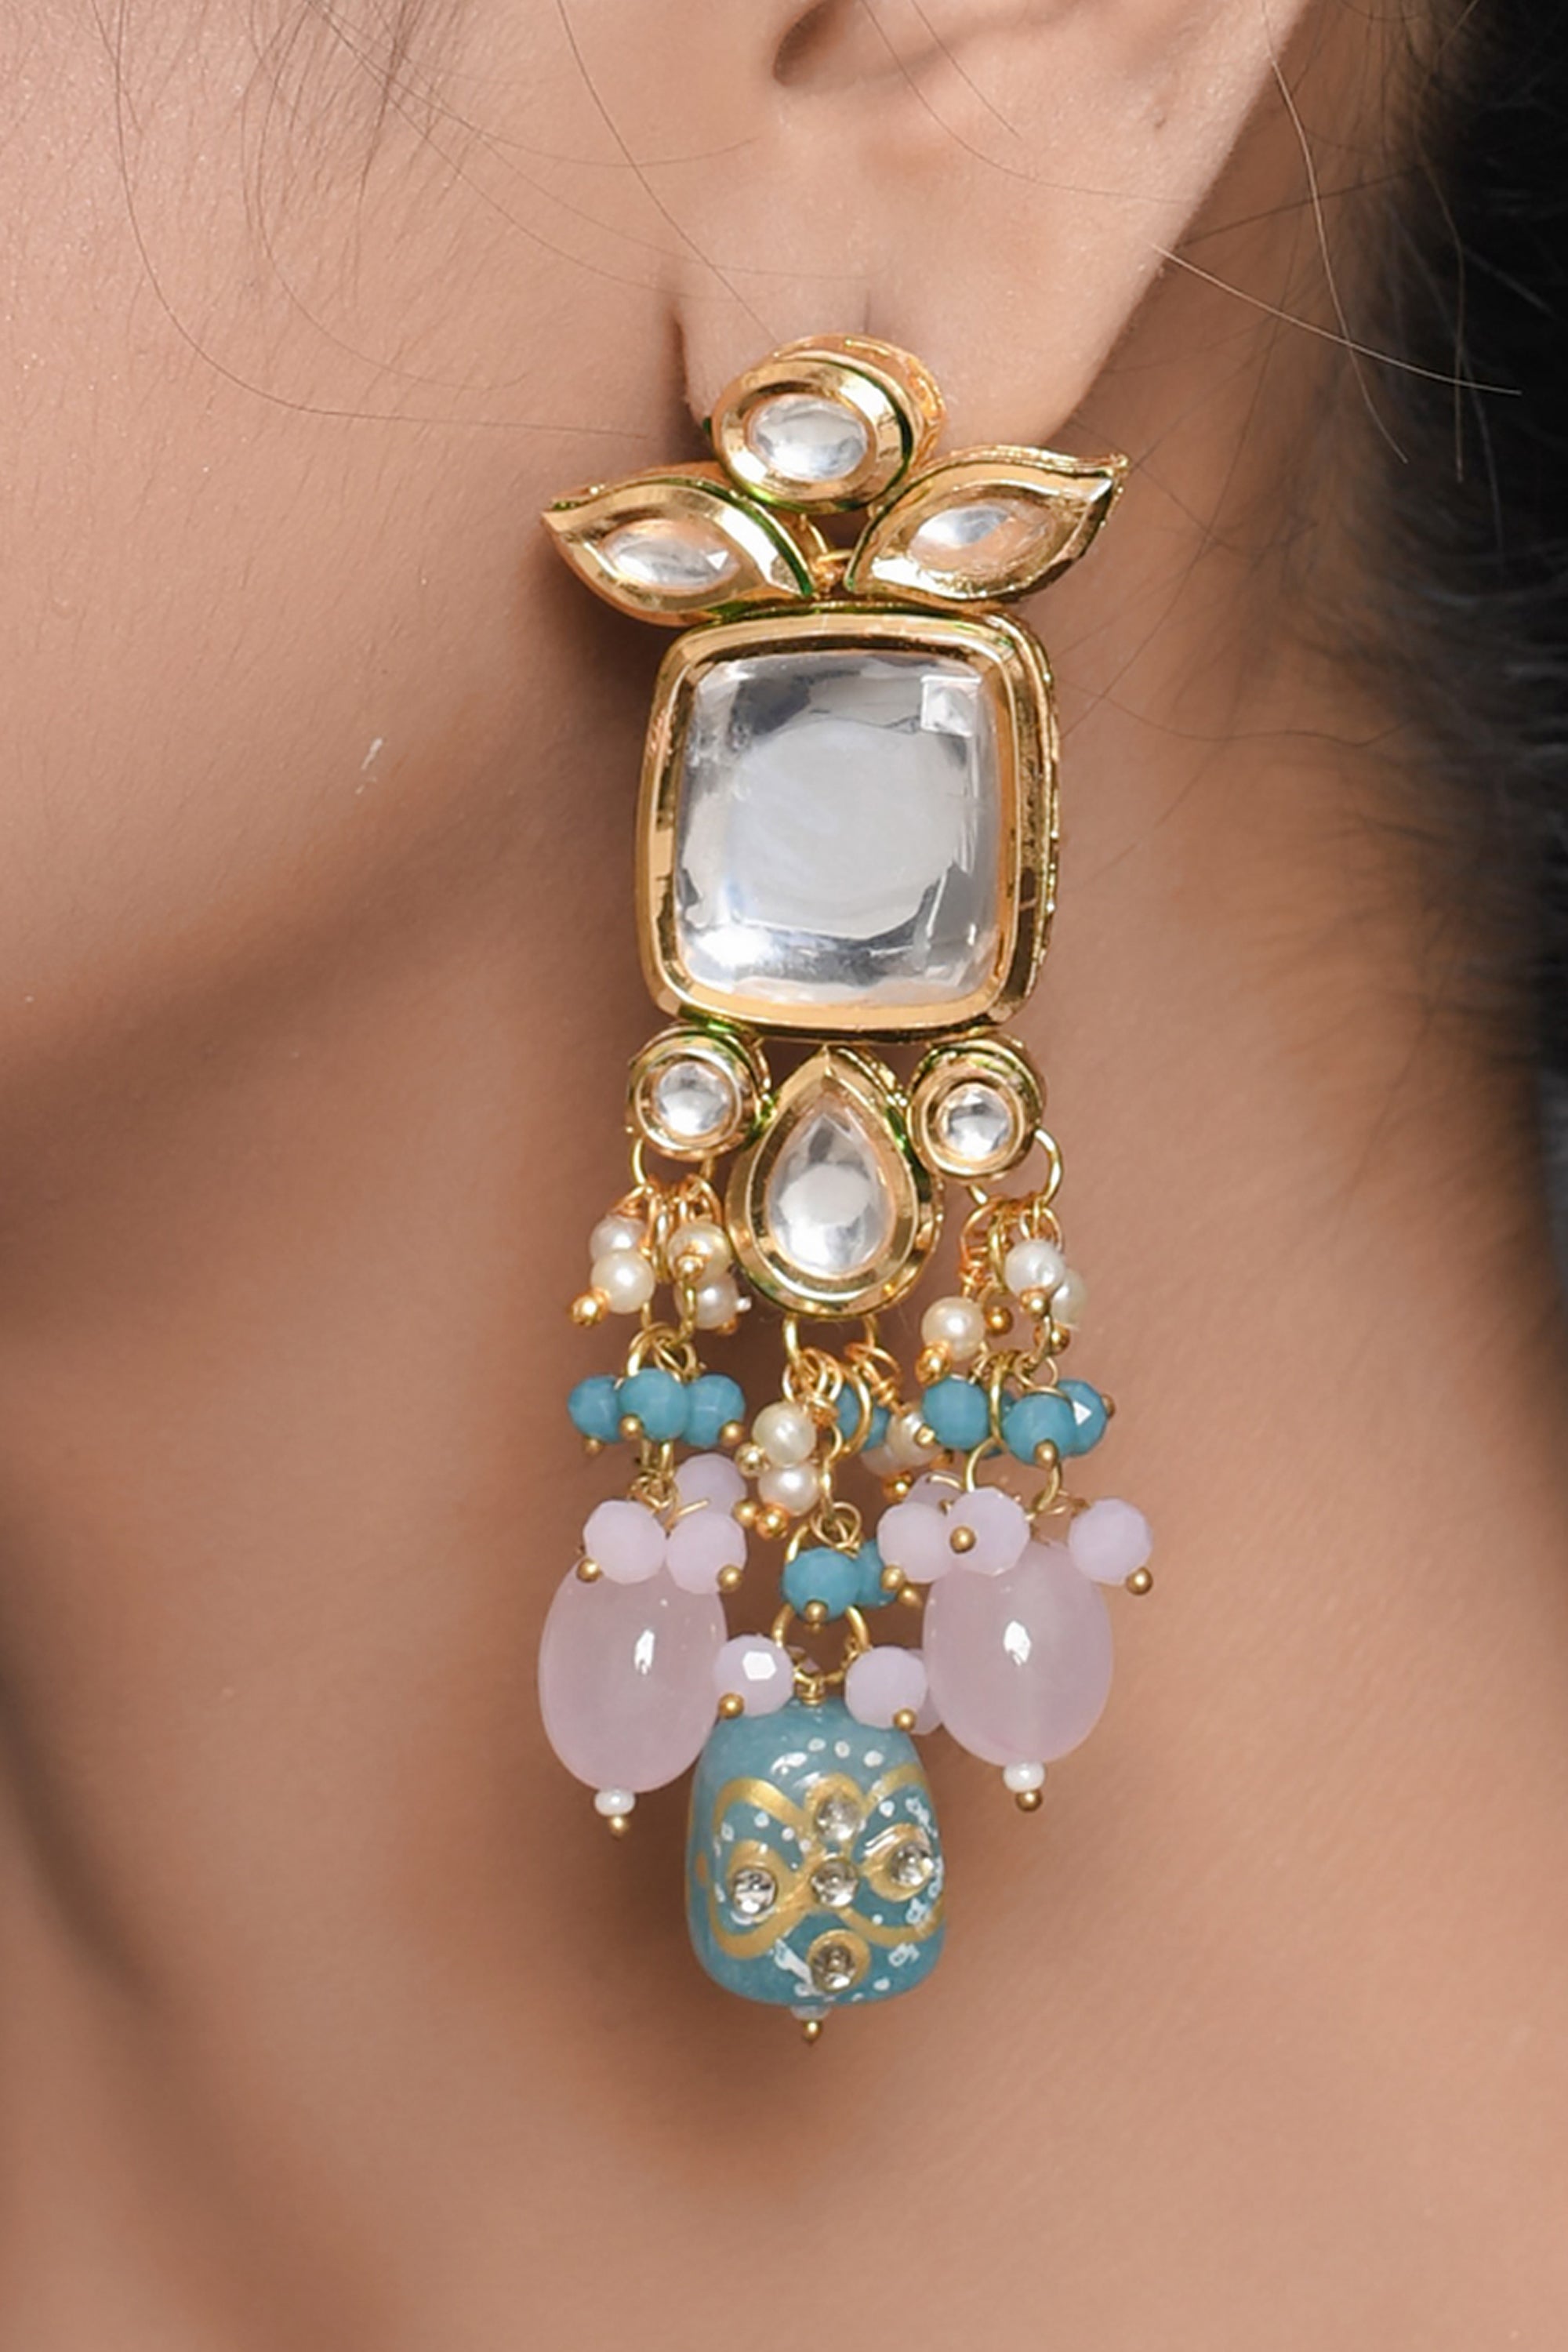 Buy Pink and Peacock Blue Bead Earrings Online On Zwende